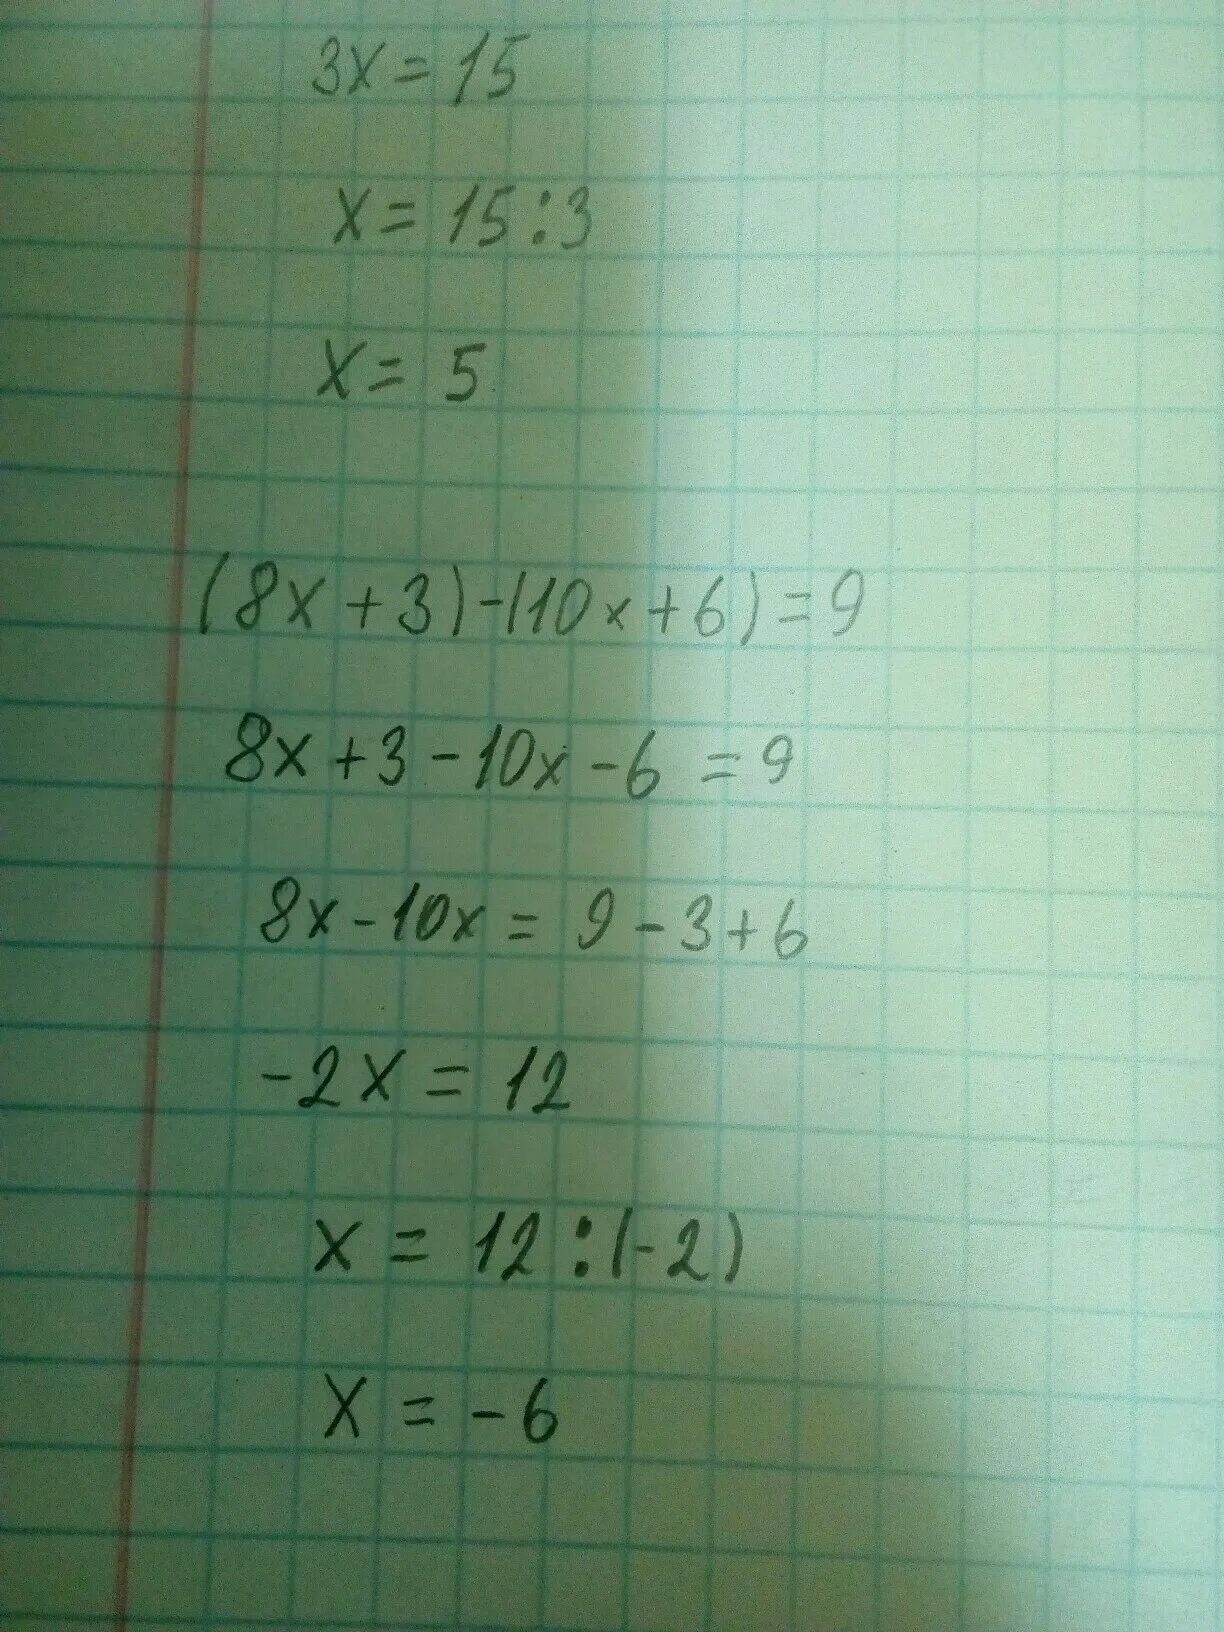 15 8x 4 10 x. (10-X)(10+X). (8x+3)-(10x+6)=9. (2x-10)-(3x-4)=6. 4x-10=x+8 ответ.